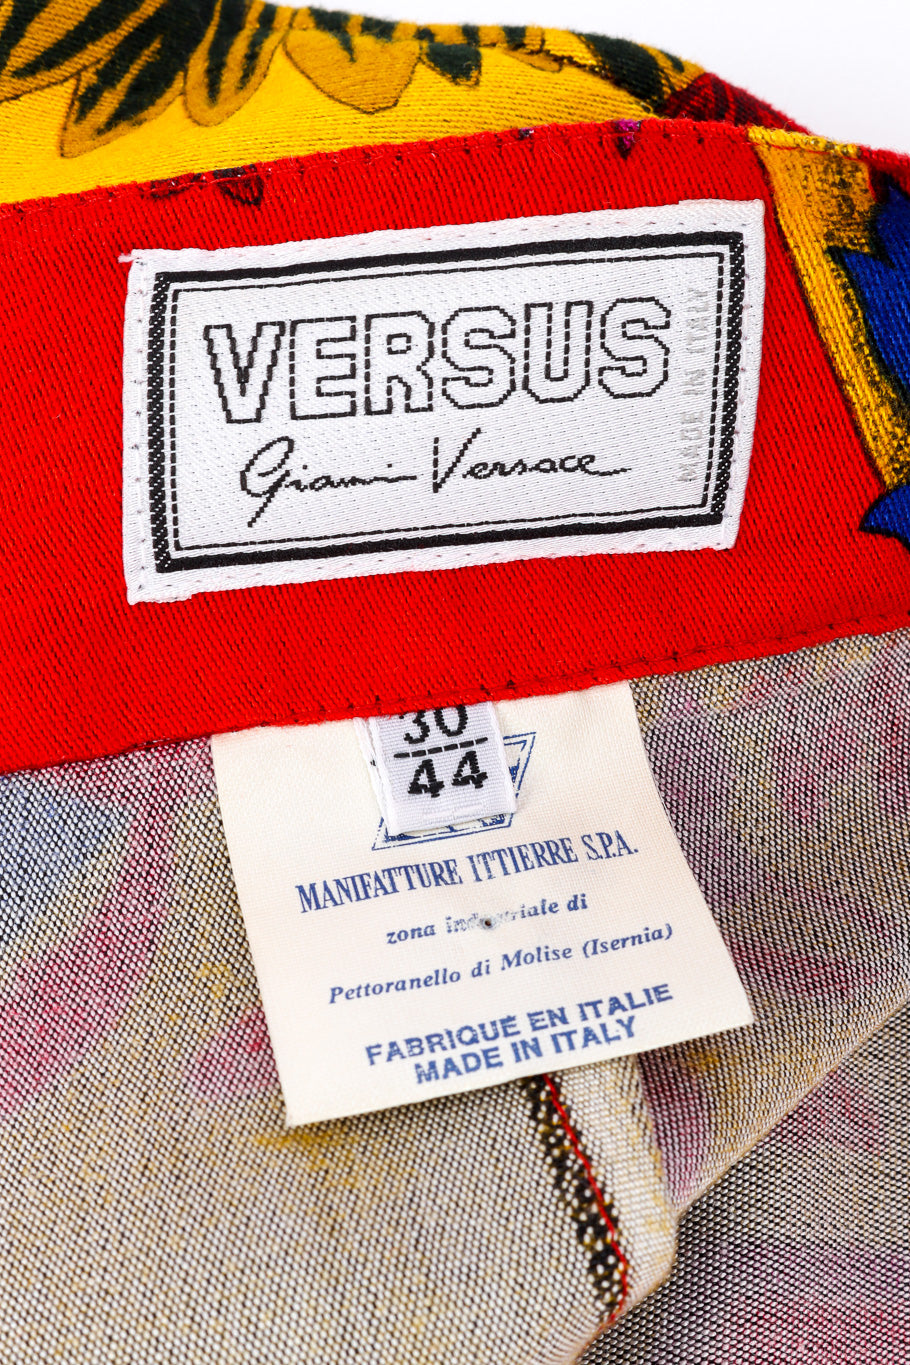 Jacket and shorts set by Versus Versace shorts label @recessla